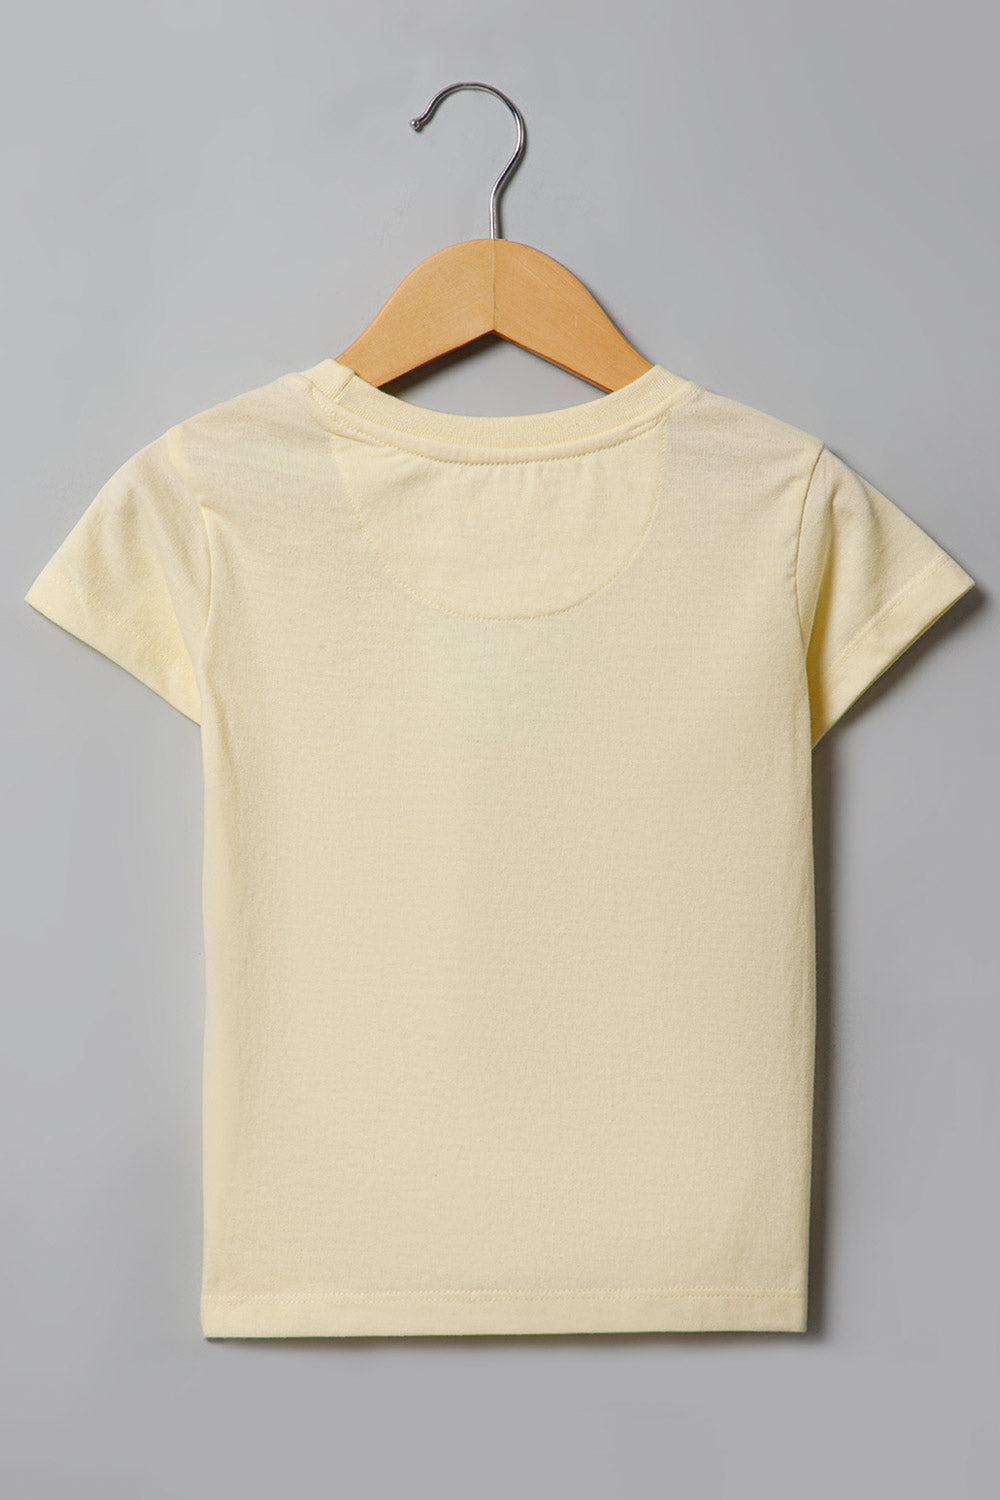 The Young Future Girls T-shirt - Light Yellow - GT07